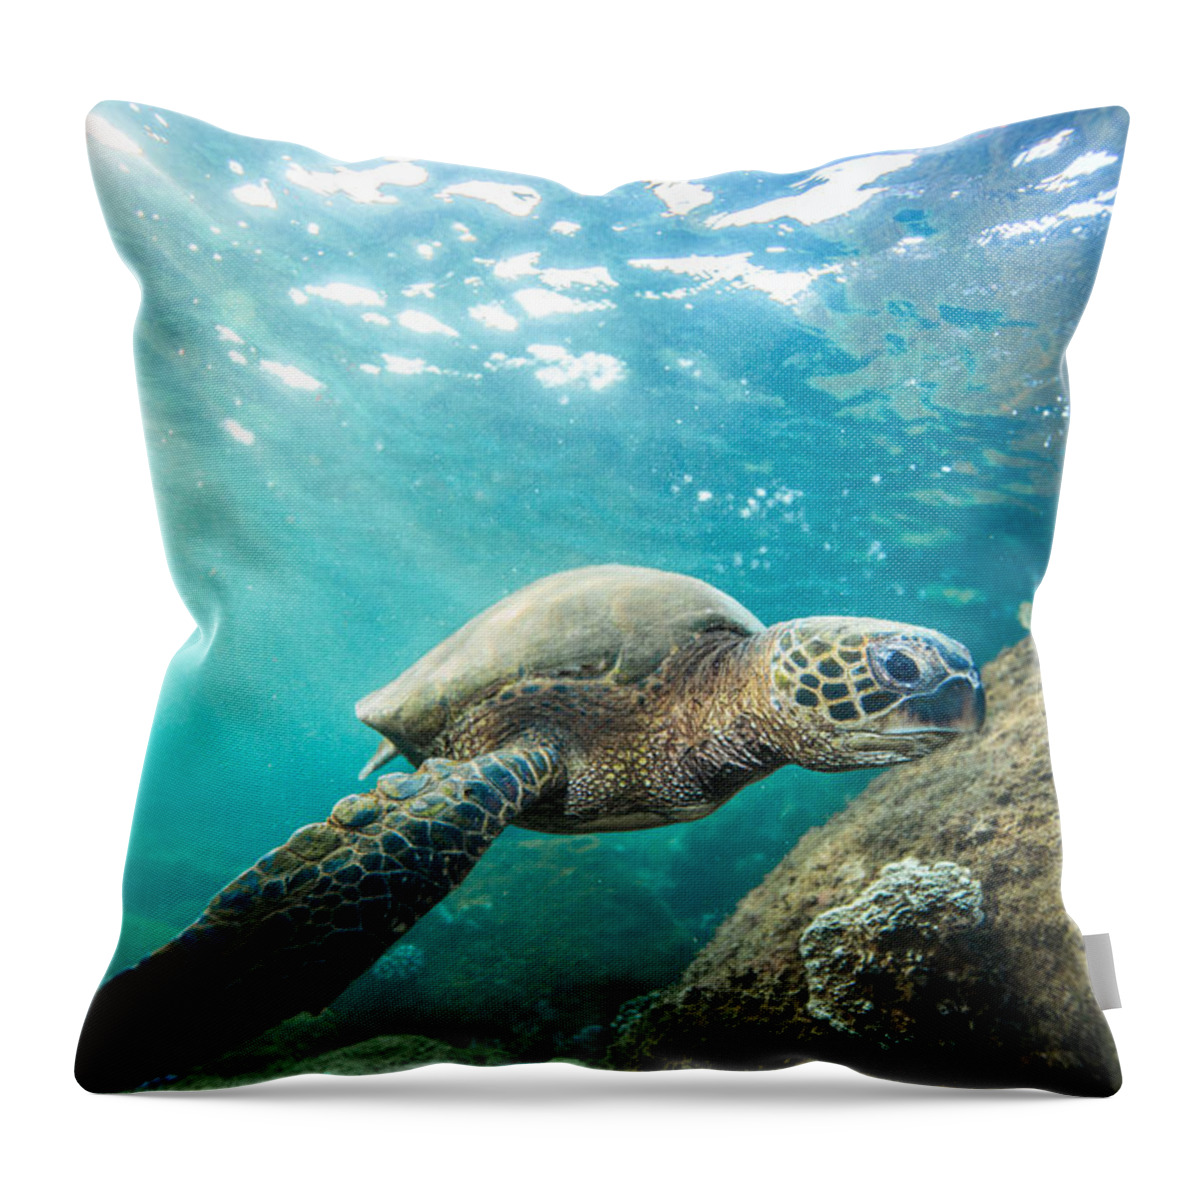 Hawaii Photography Throw Pillow featuring the photograph Waimea Sea Turtle by Leonardo Dale